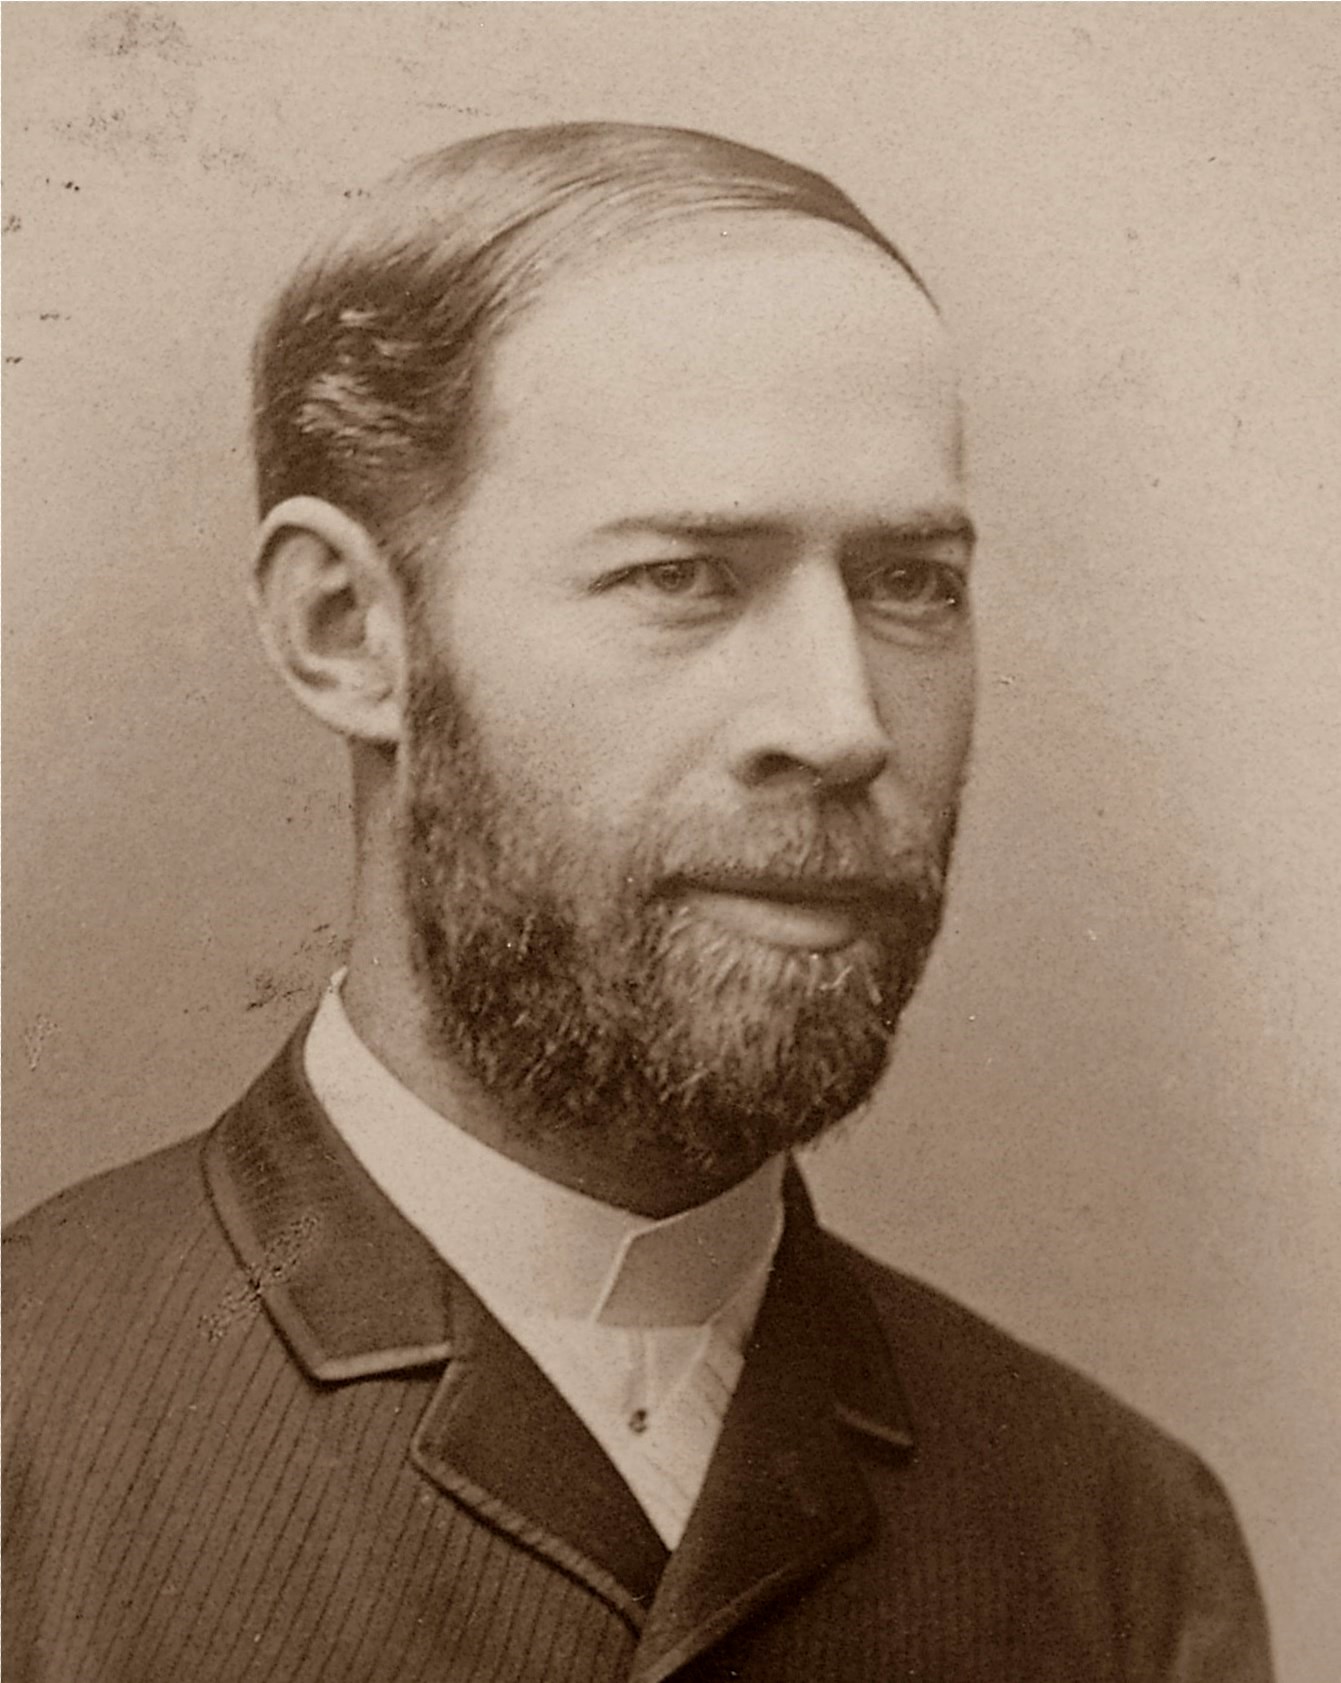 Fotografía de Heinrich Hertz